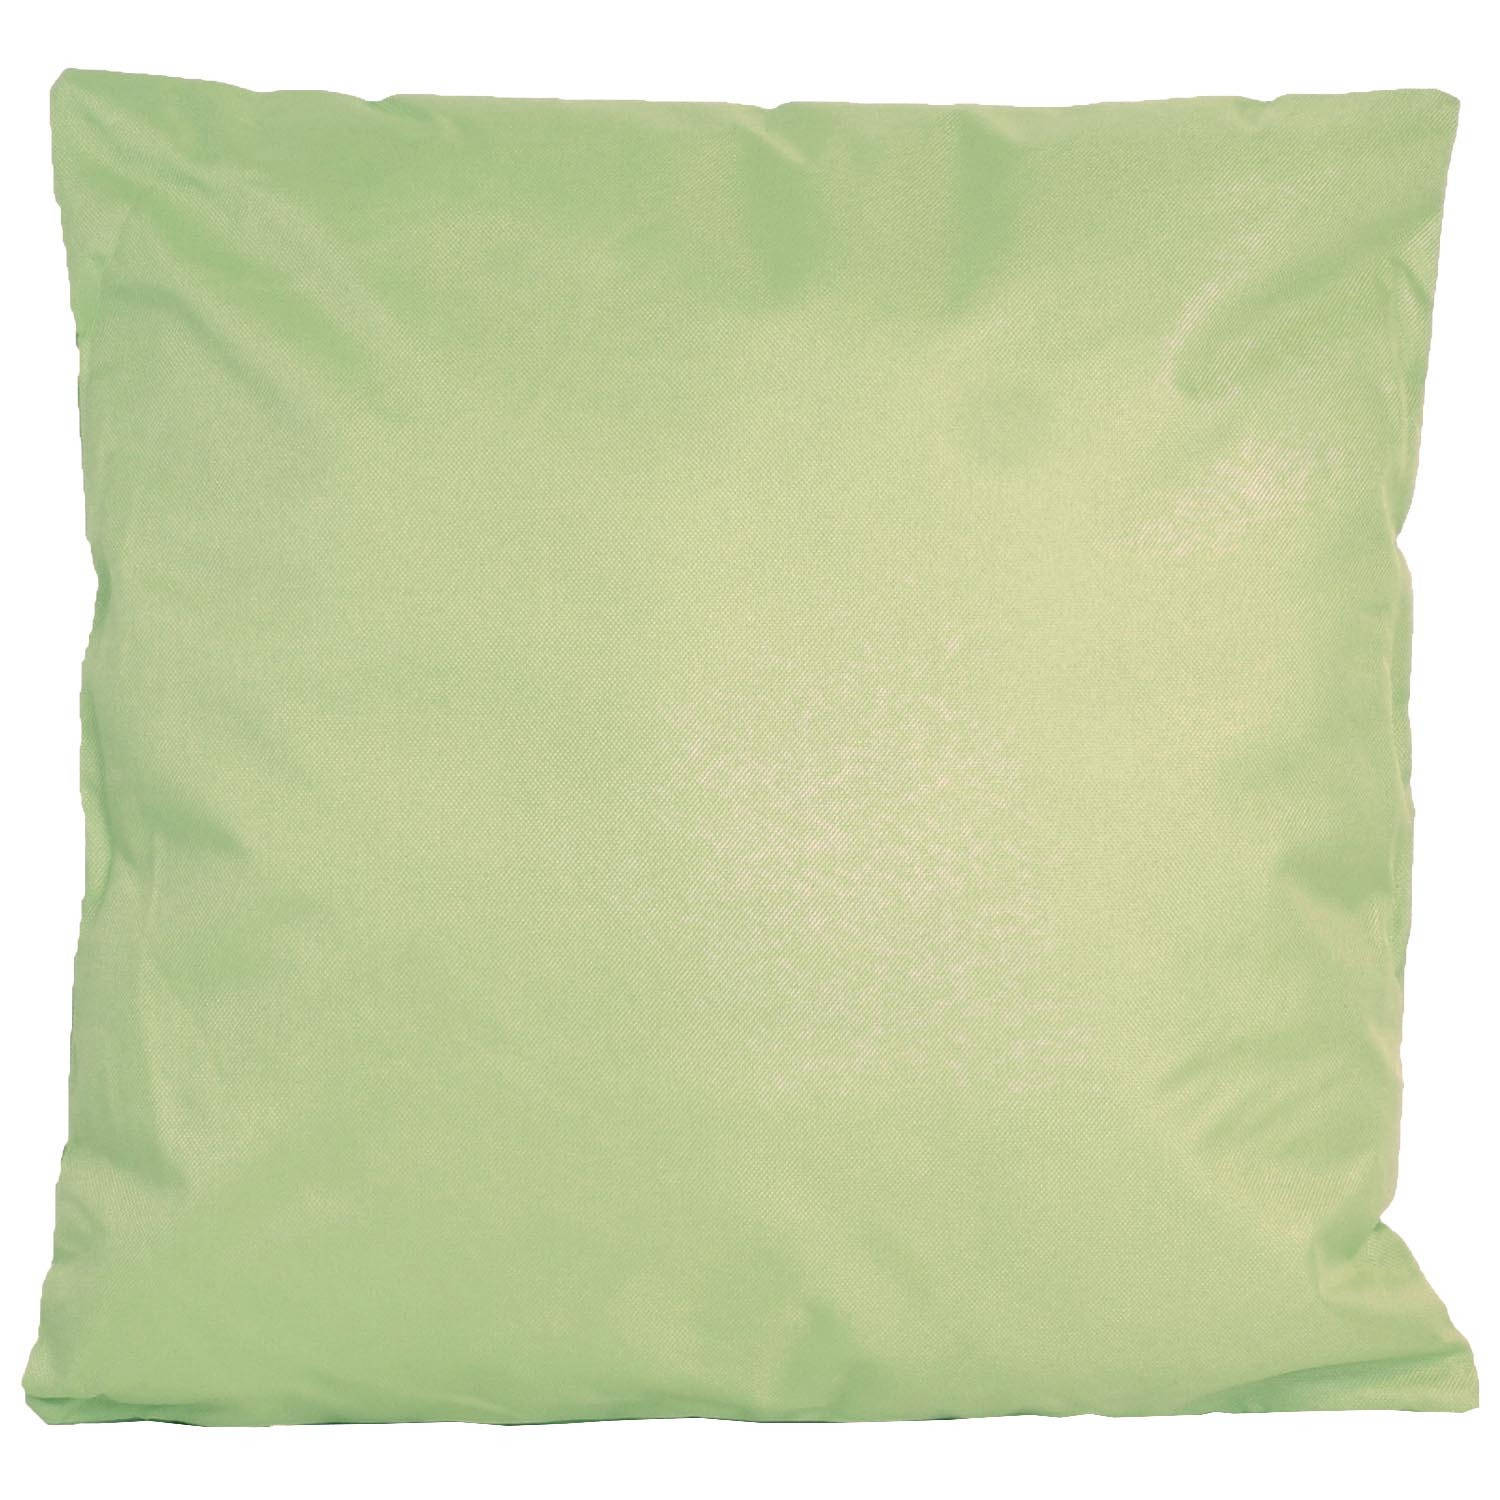 1x Bank/sier kussens voor binnen en buiten in de kleur mint groen 45 x 45 cm - Sierkussens